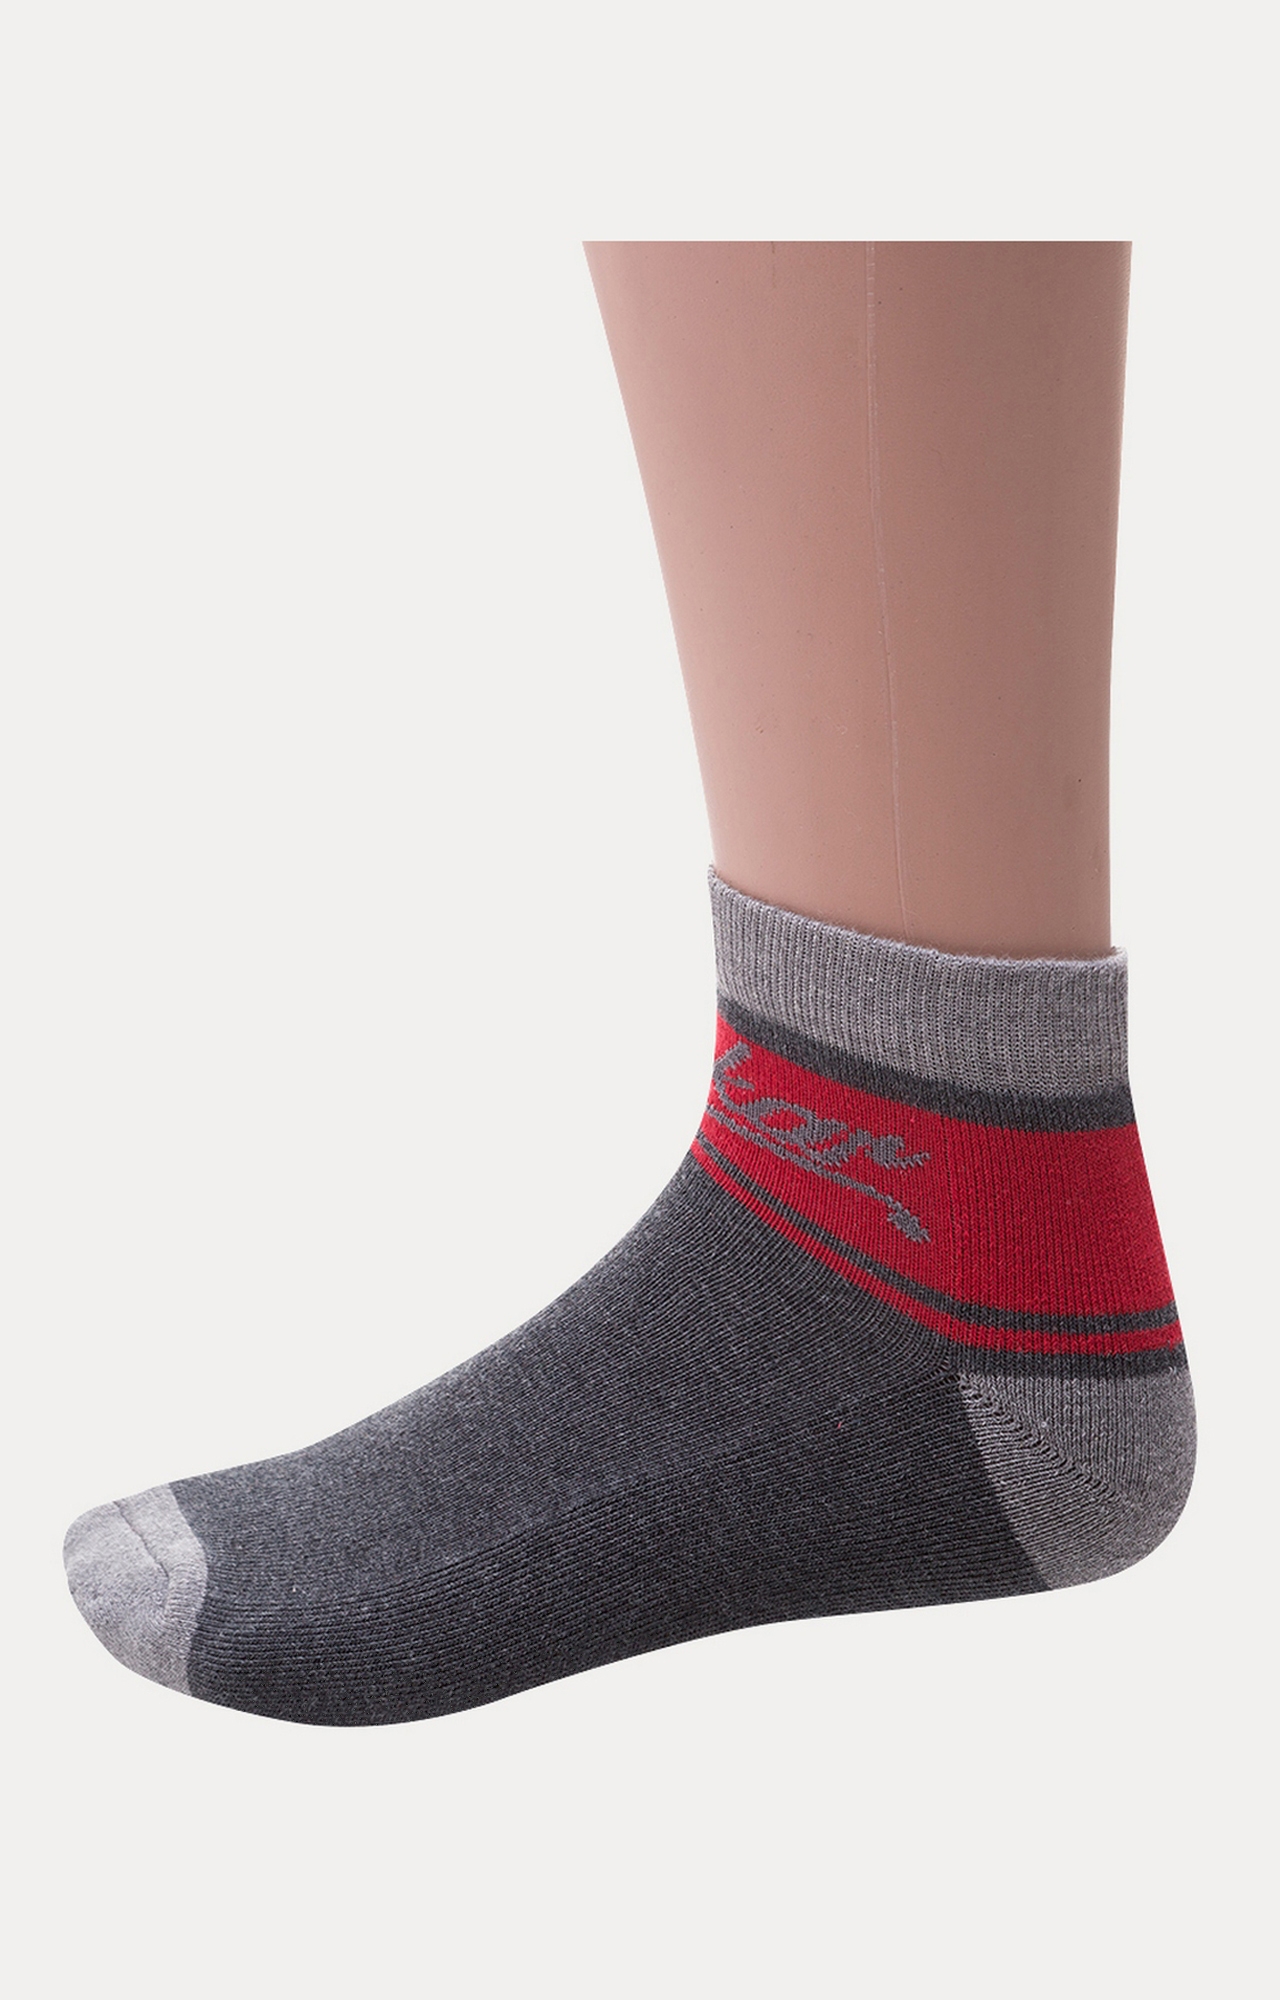 spykar | Spykar White & Grey Printed Ankle Length Socks - Pair Of 2 1